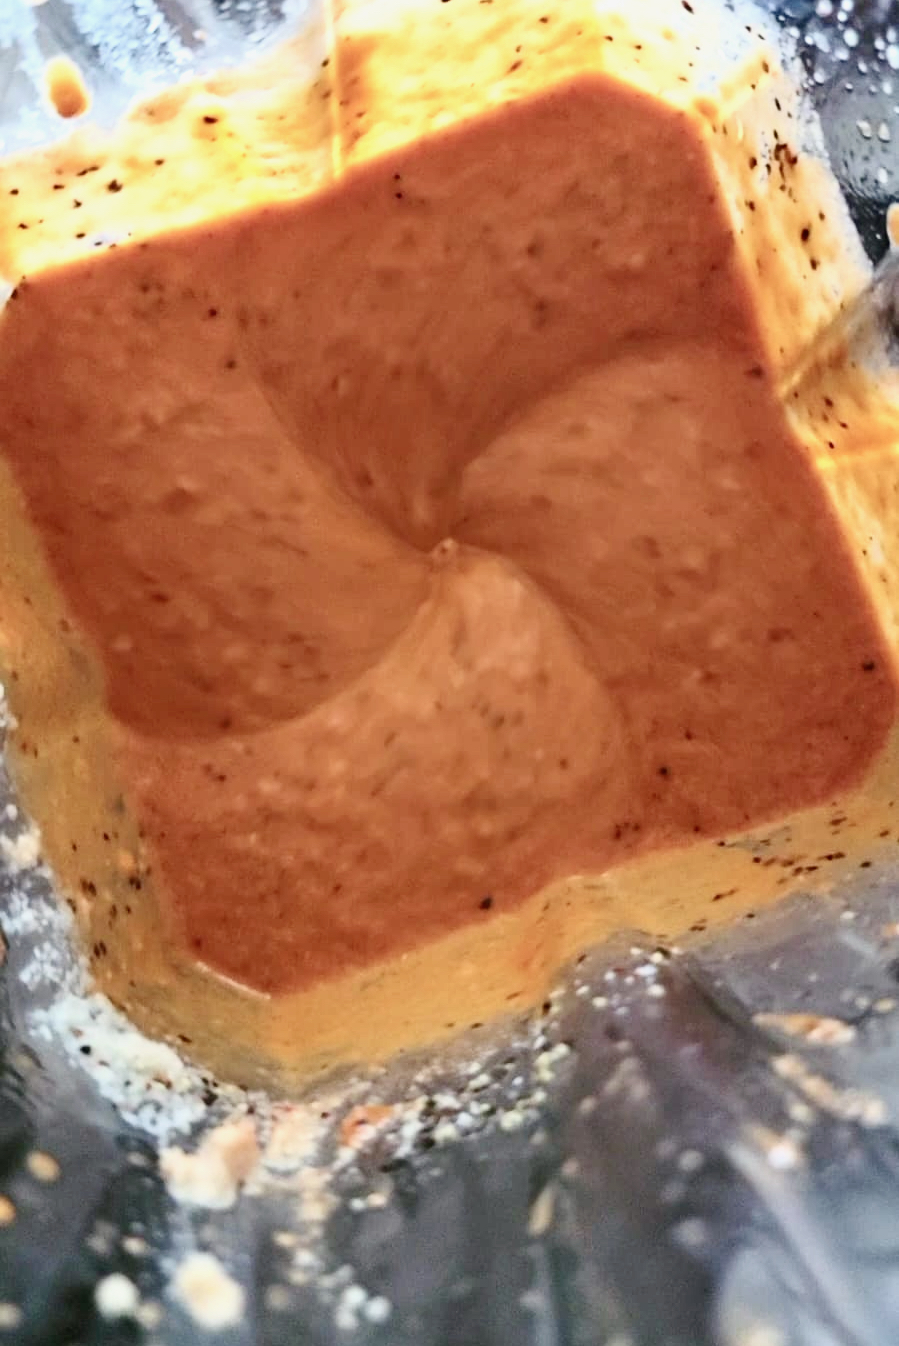 tangy roasted pepper dip [muhammara] blending